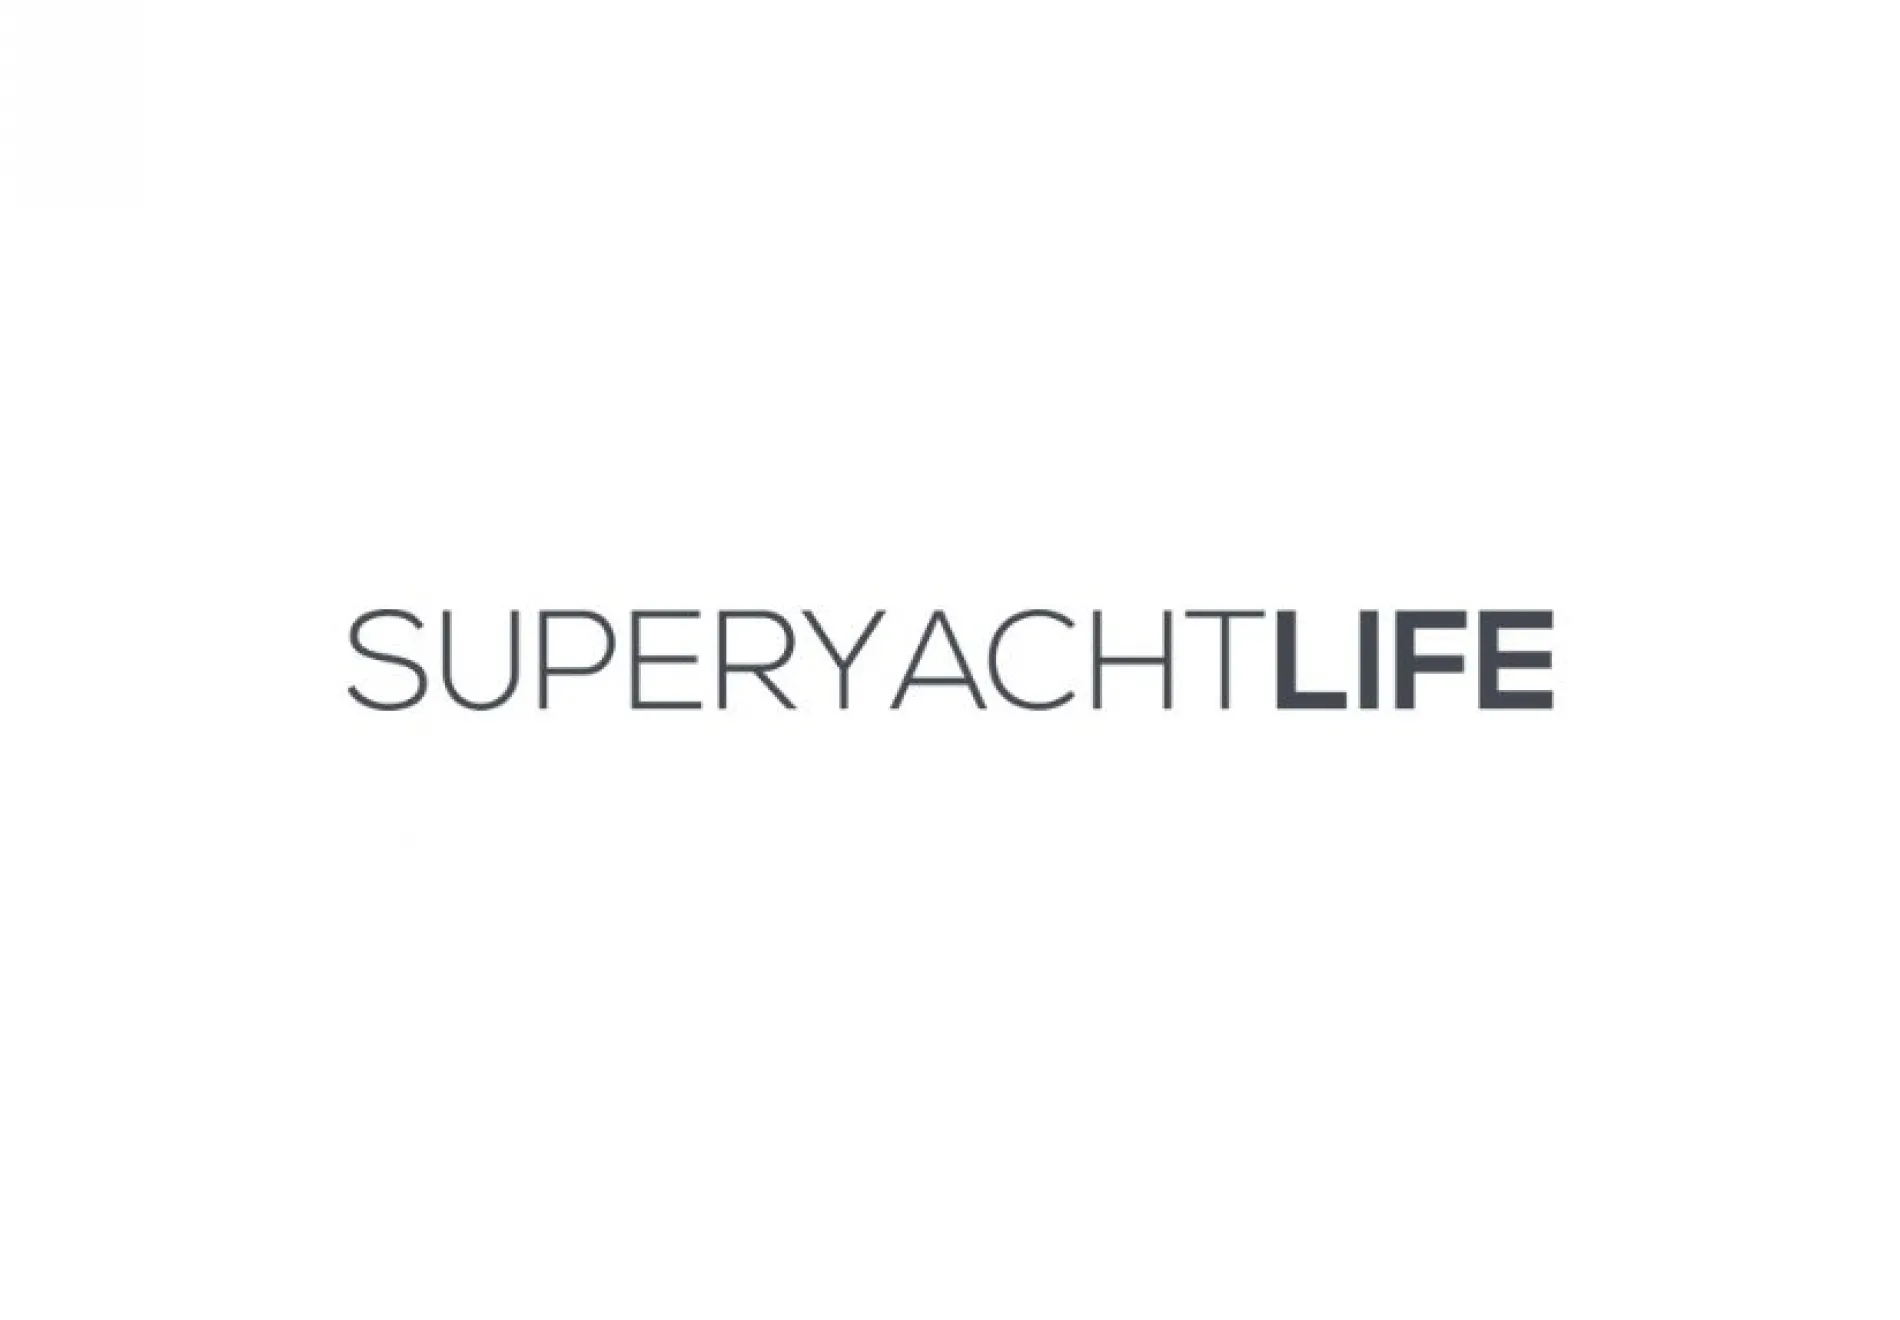 Super yacht life